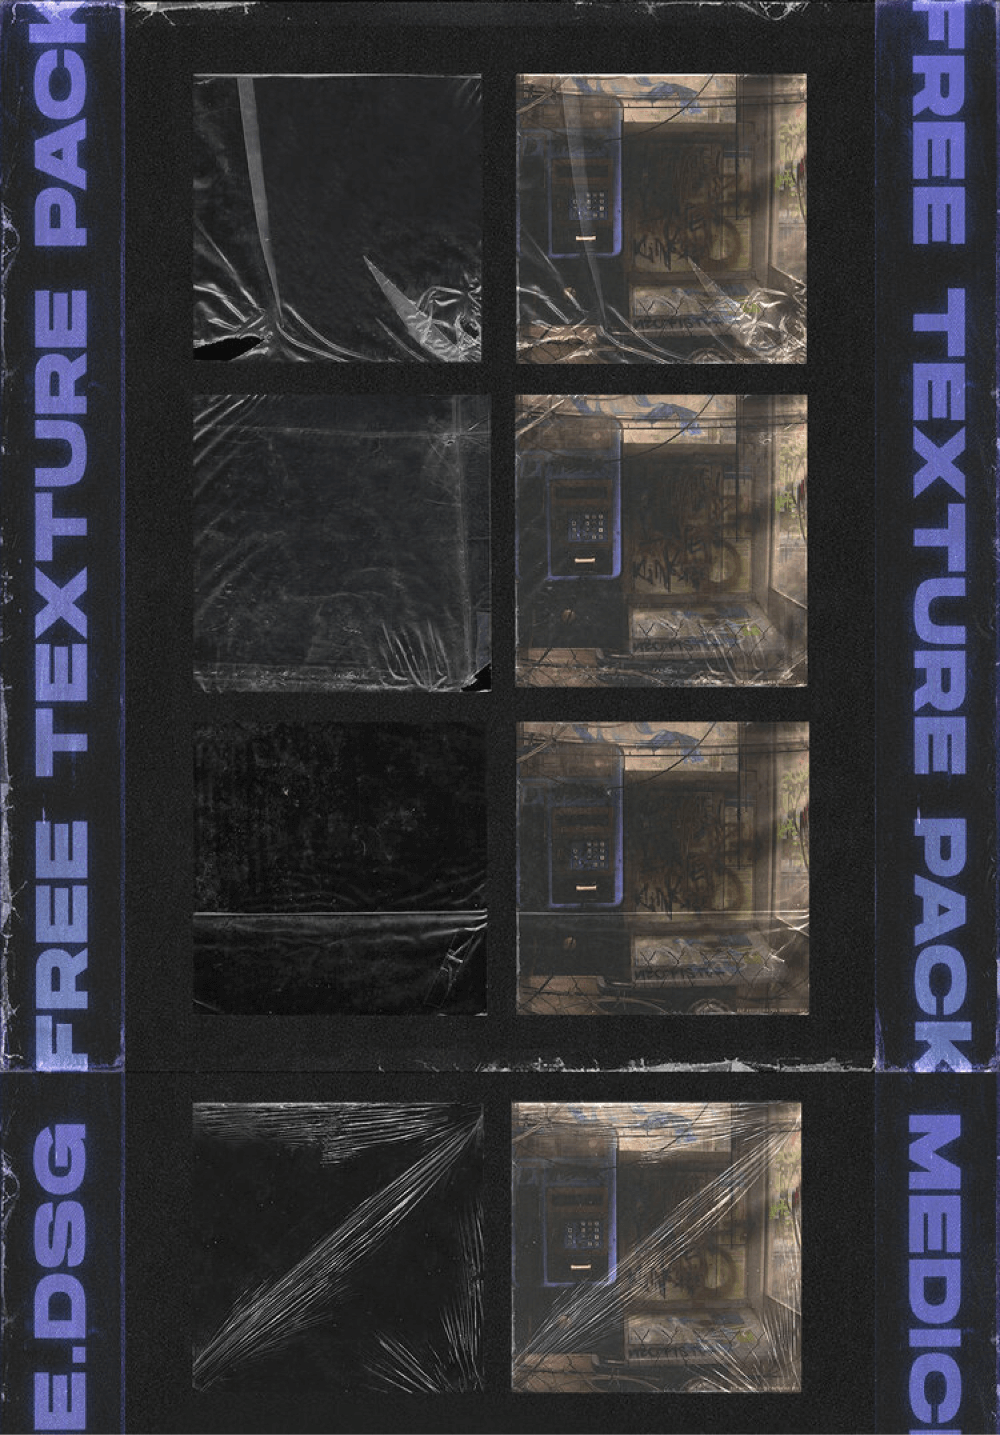 Free Plastic Textures Vol. 2 - Pixel Surplus